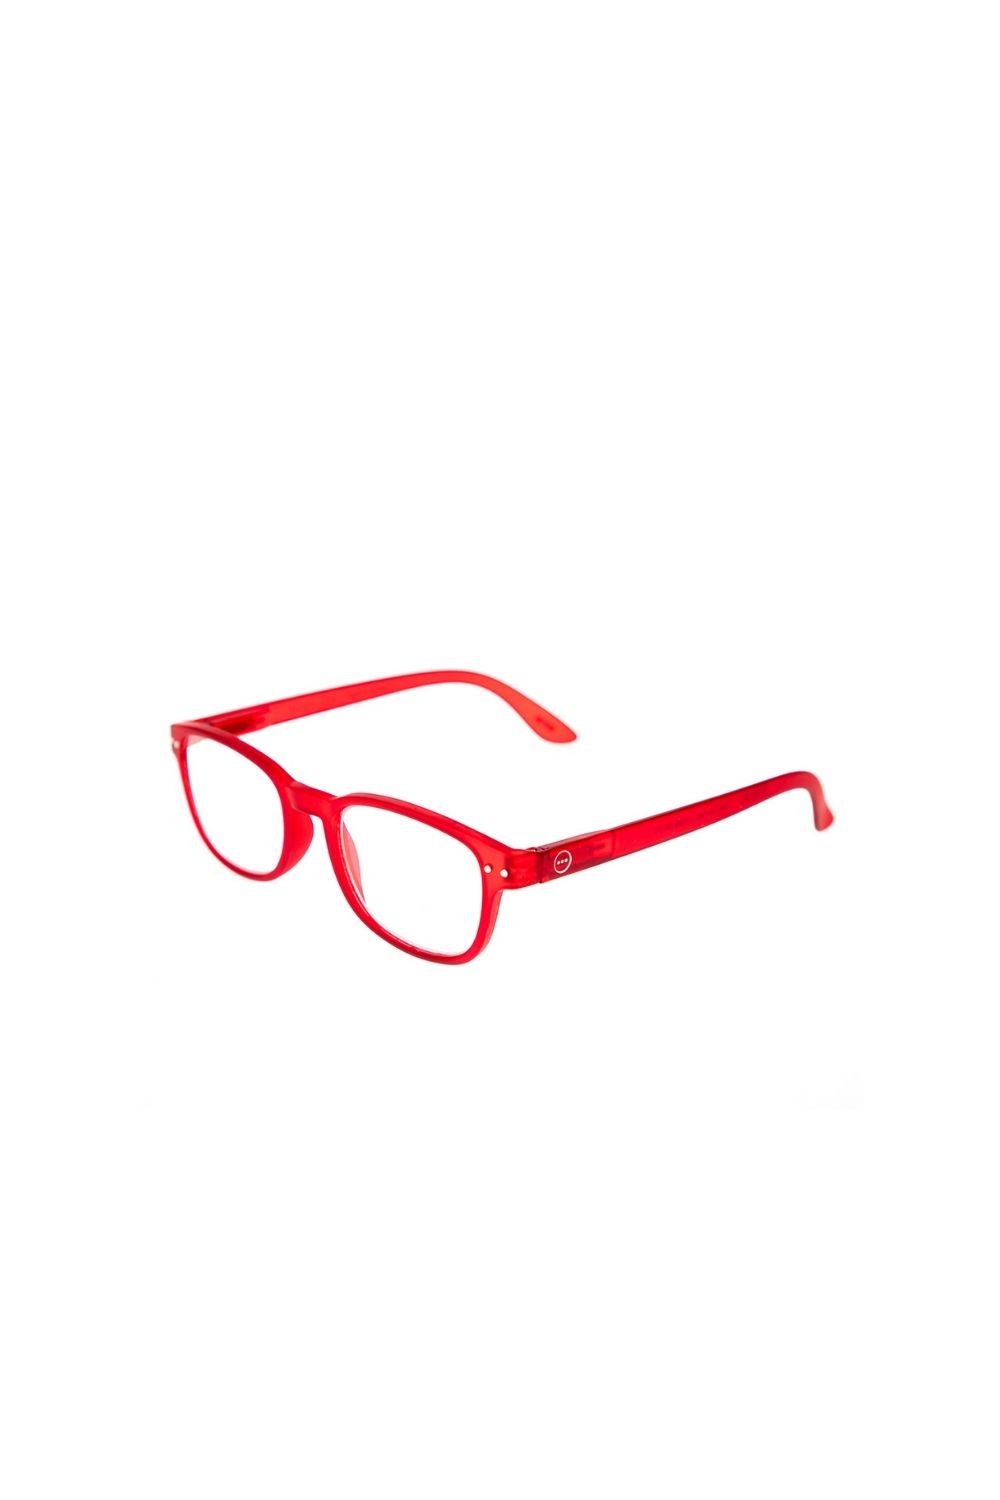 IZIPIZI - Unisex γυαλιά οράσεως IZIPIZI SHF COL READING #B κόκκινα Γυναικεία/Αξεσουάρ/Γυαλιά/Οράσεως